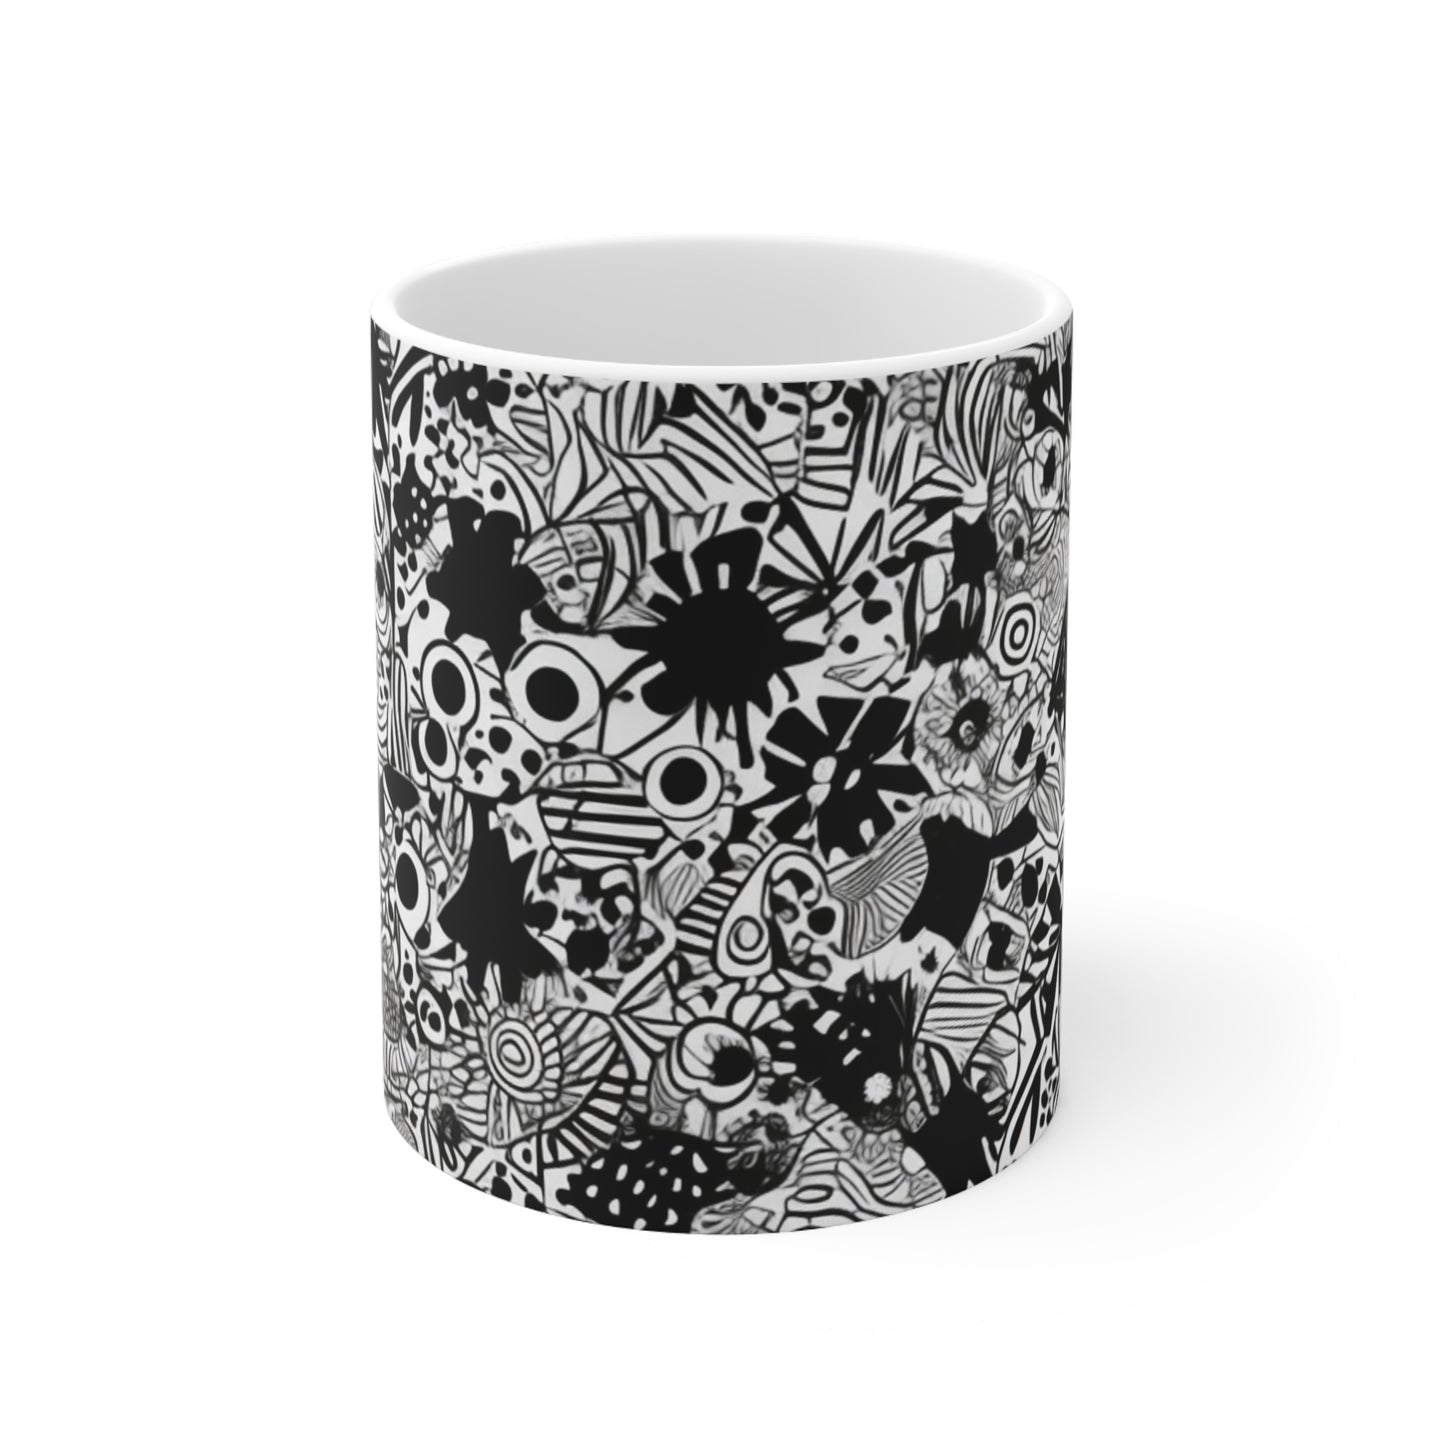 Messy Black and White Patterns - Ceramic Coffee Mug 11oz